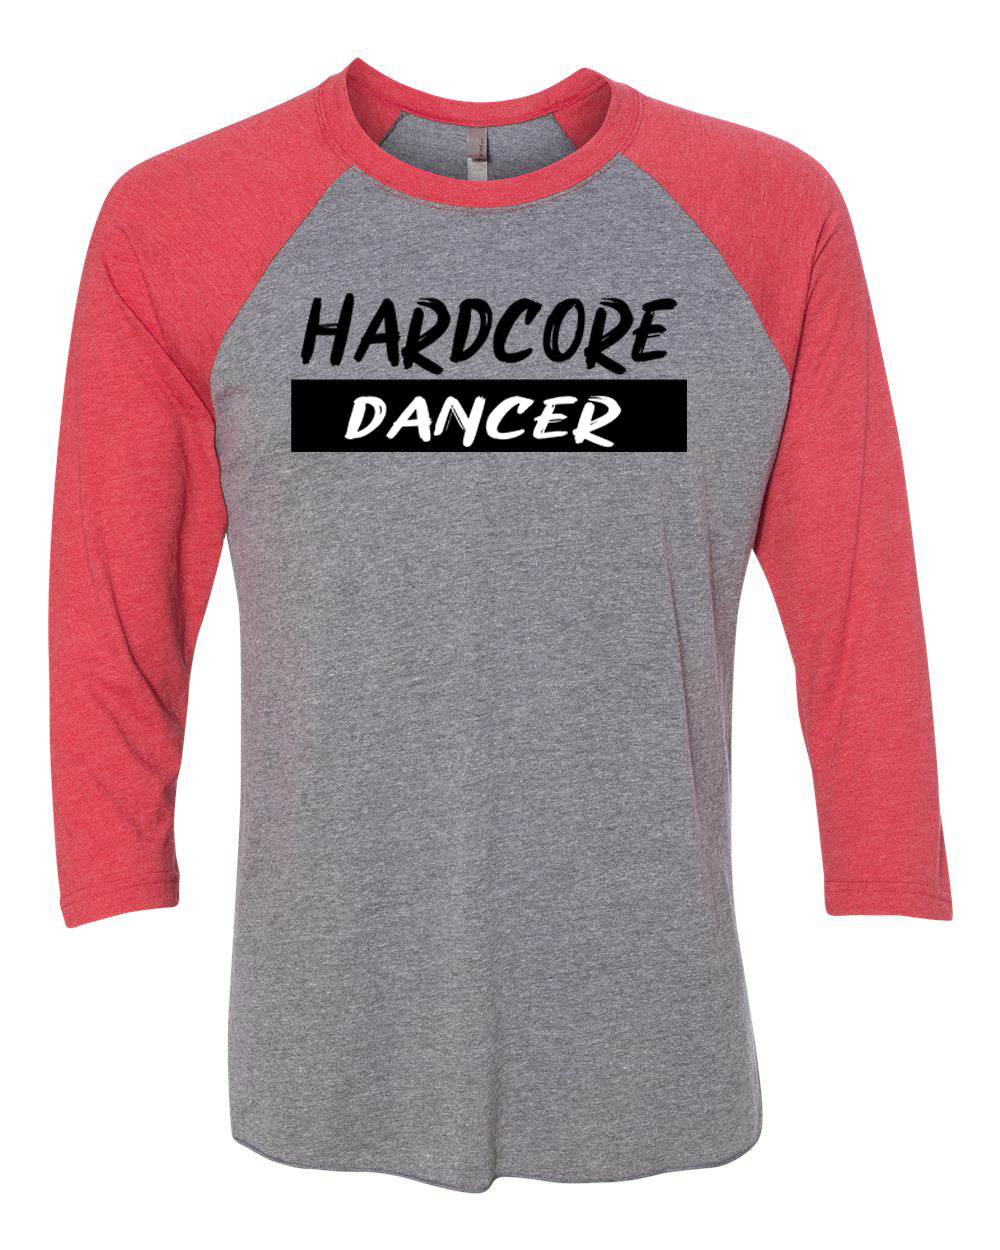 Hardcore Dancer Adult 3/4 Sleeve Raglan T-Shirt